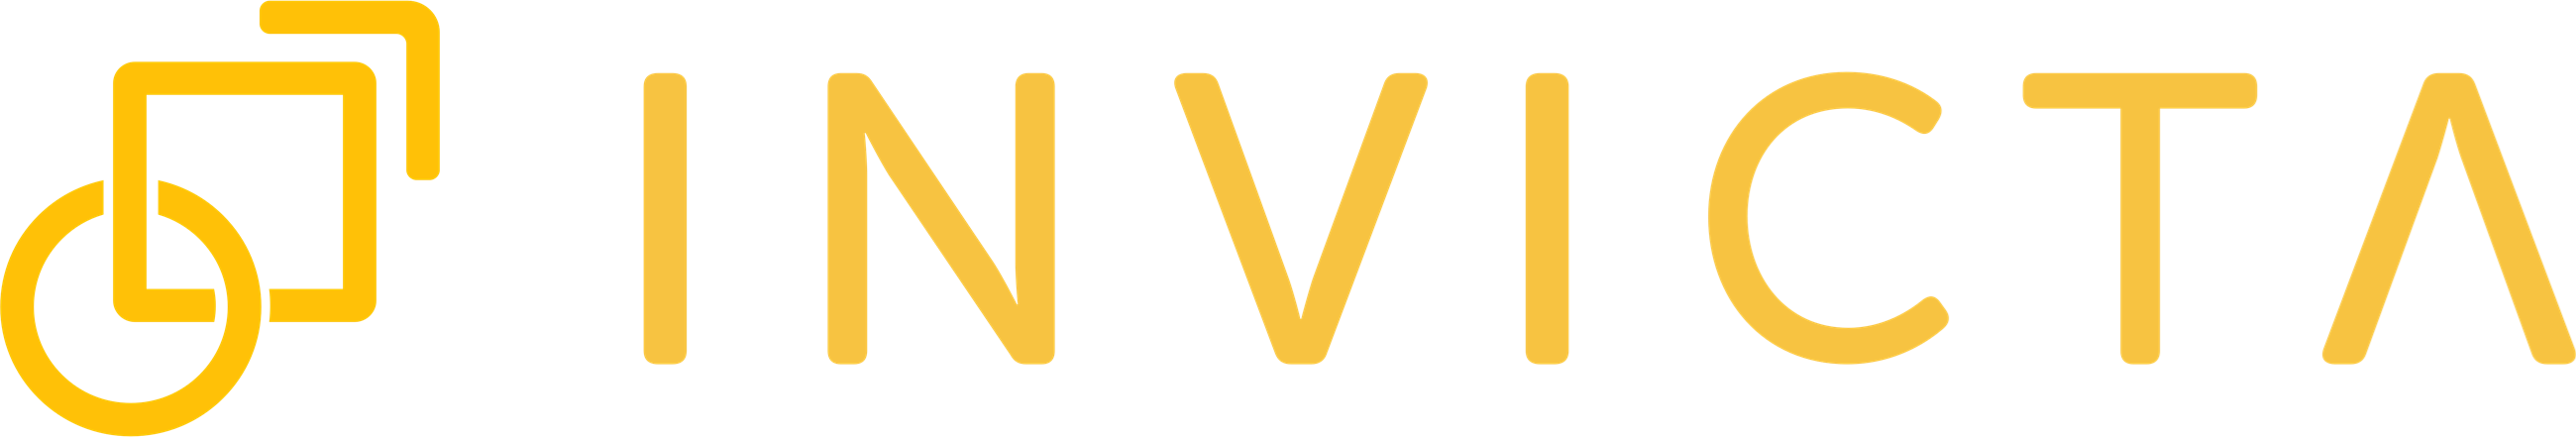 full_logo_yellow